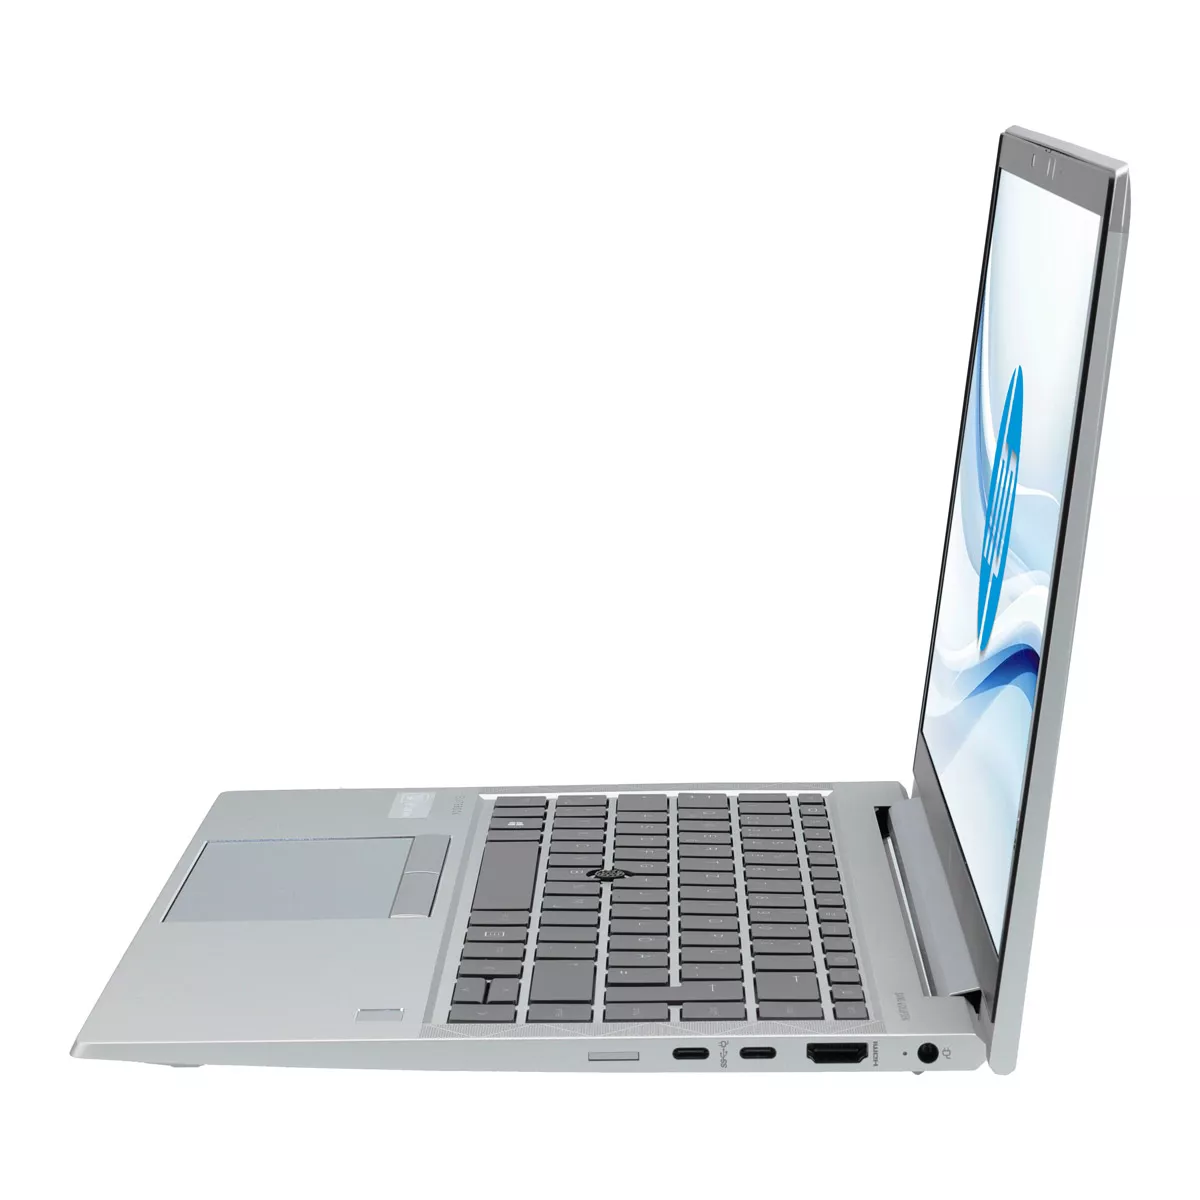 HP EliteBook 840 G7 Core i5 10310U Full-HD 240 GB M.2 nVME SSD Webcam B